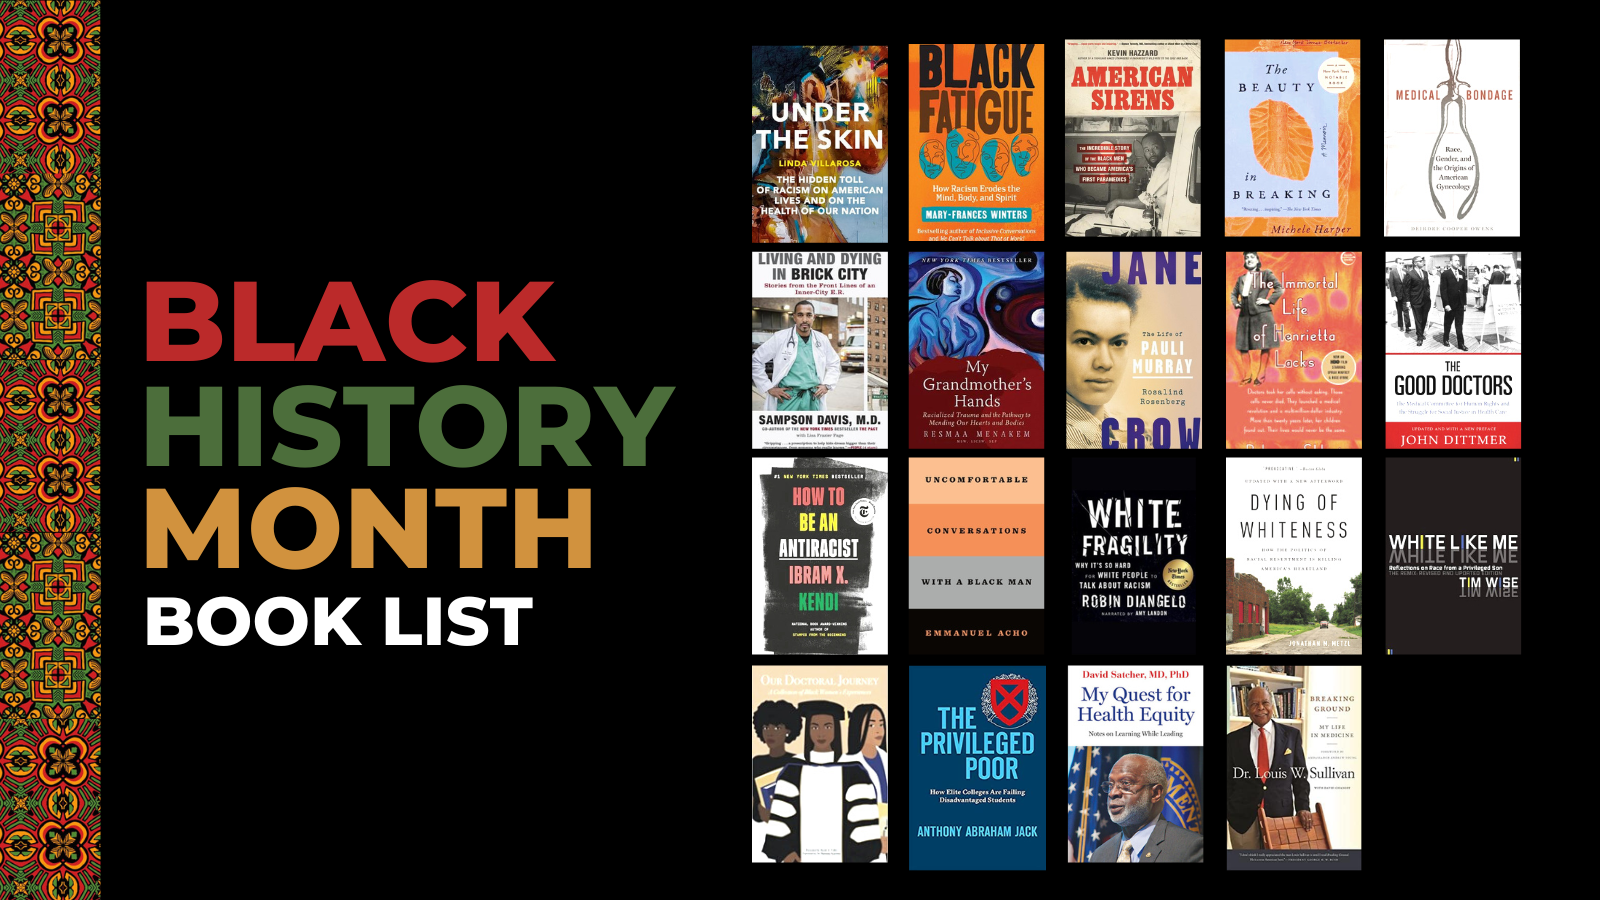 Black history month list of books